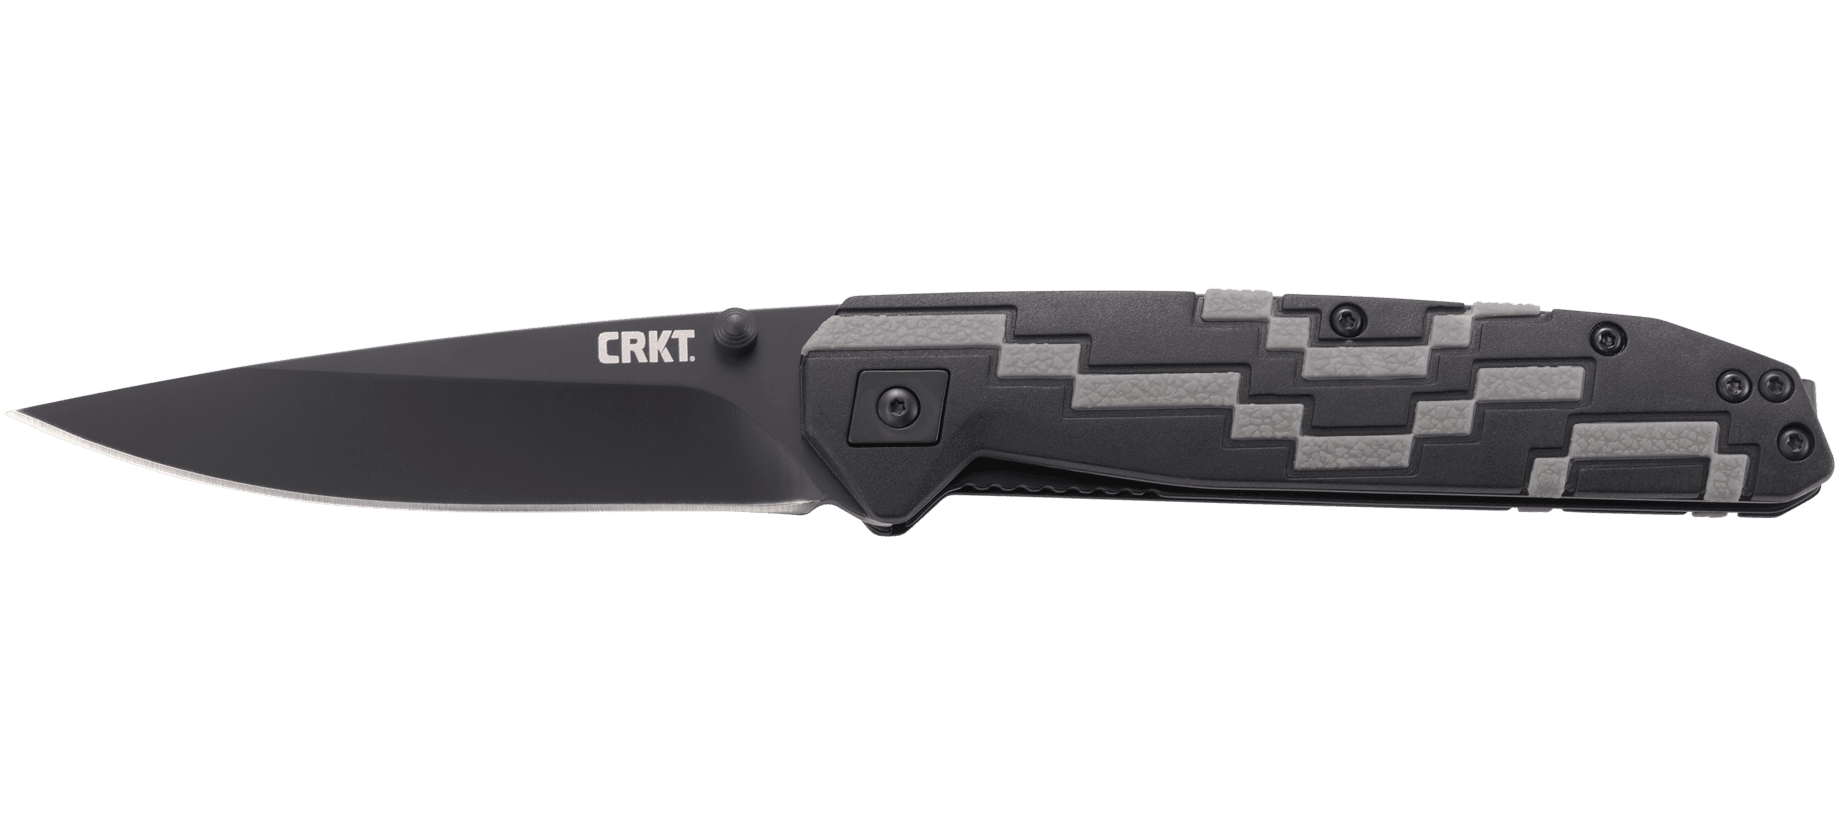 Полуавтоматический складной нож Hyperspeed, CRKT 7020, сталь 8Cr14MoV Black Oxide Coating, рукоять термопластик GRN - фото 9